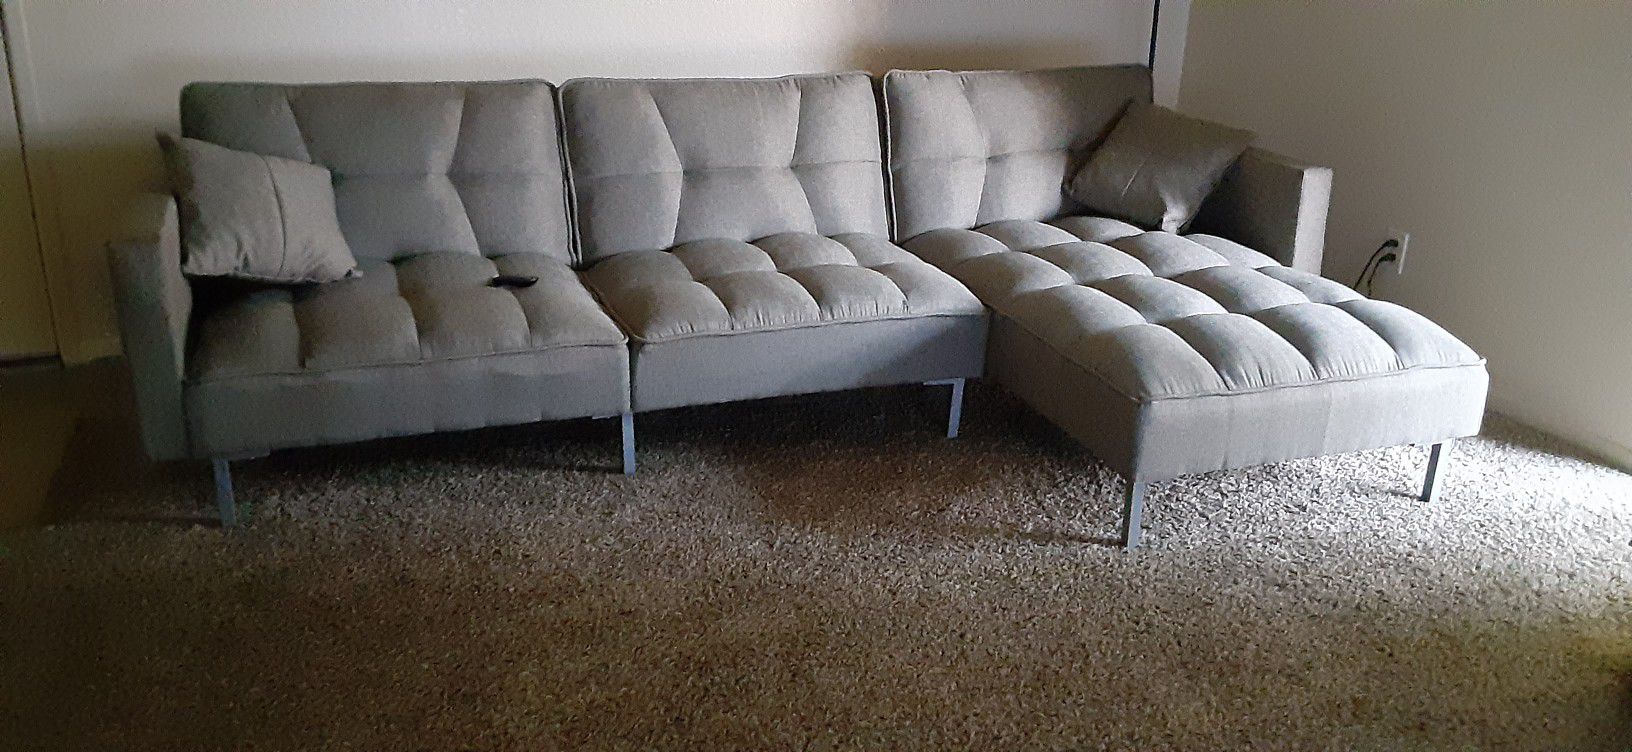 Futon couch, grey